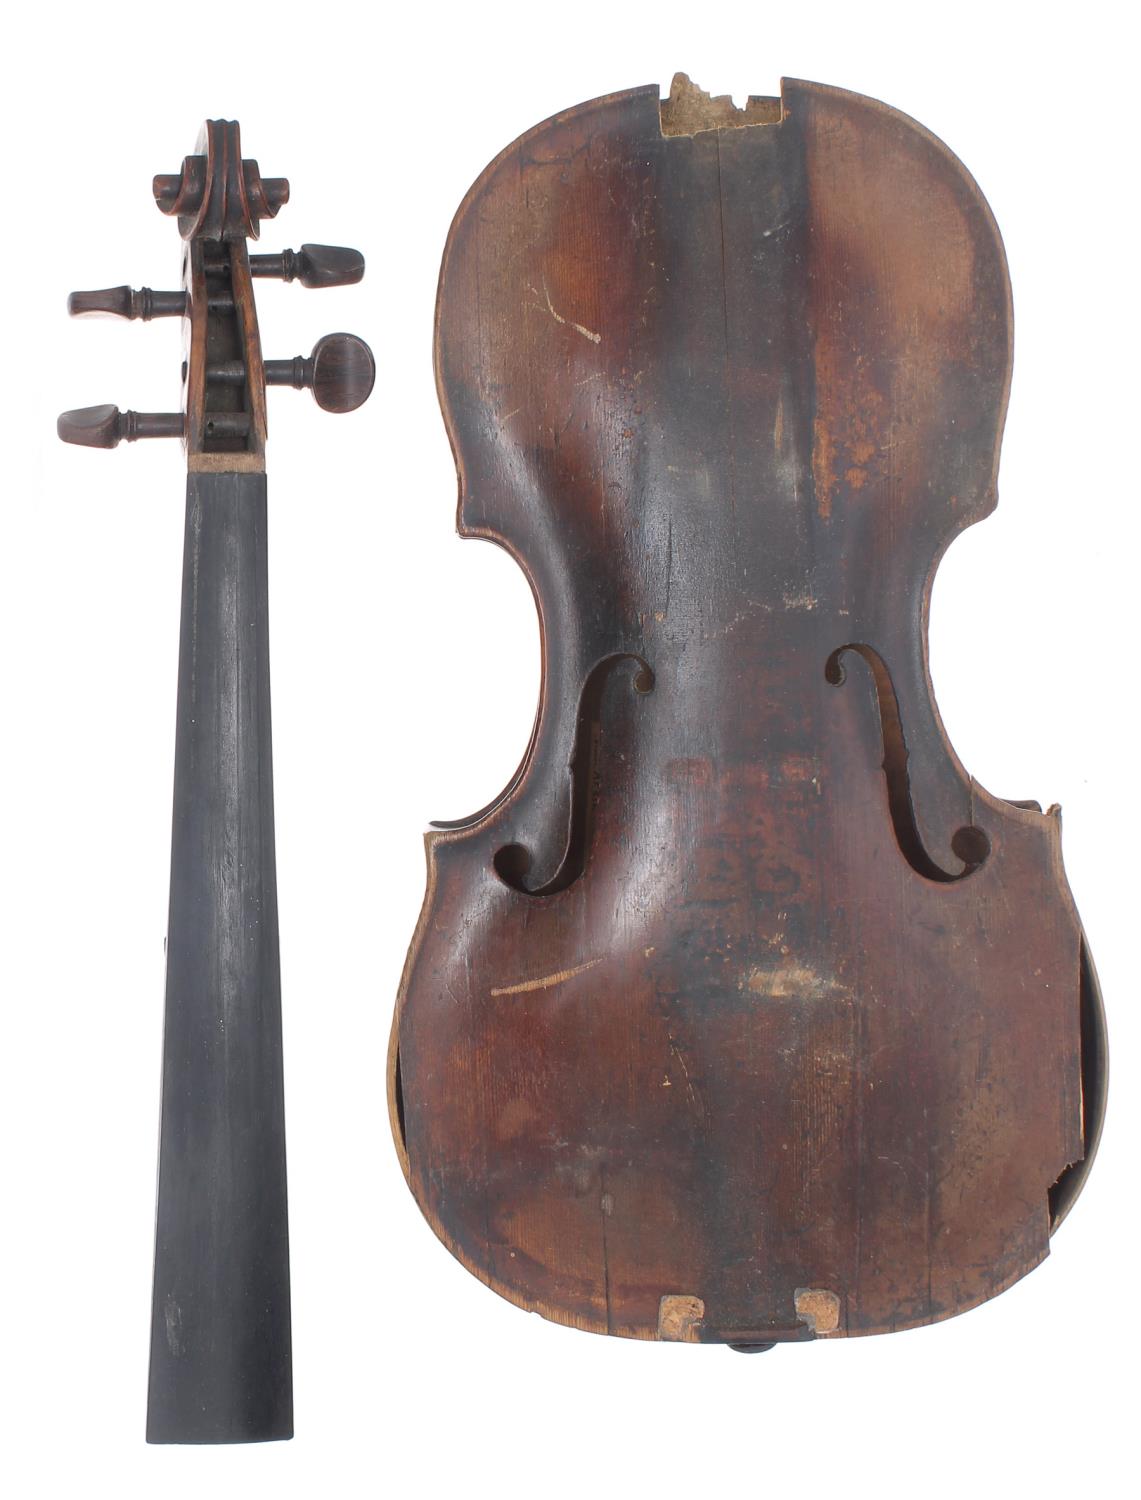 Interesting old violin in need of restoration, case